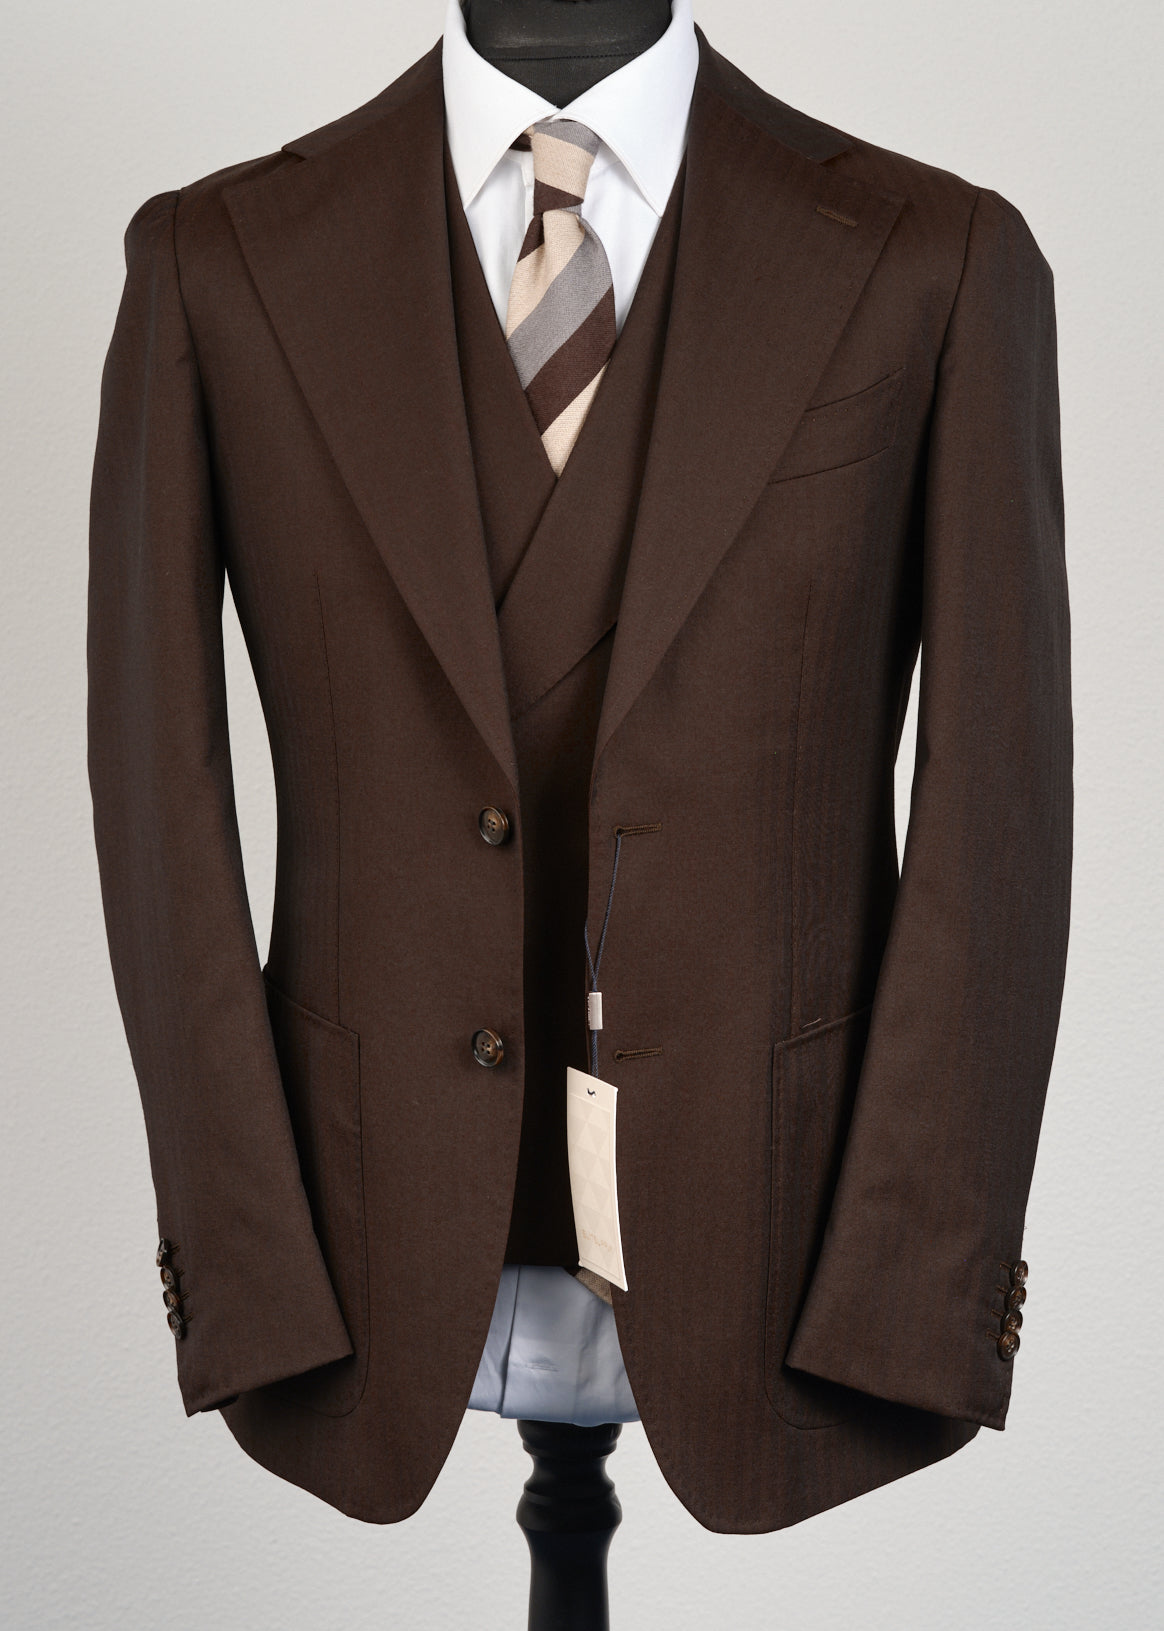 New Suitsupply Havana Brown Herringbone Pure Wool Super 130s Suit - Size 38R (No Waistcoat)